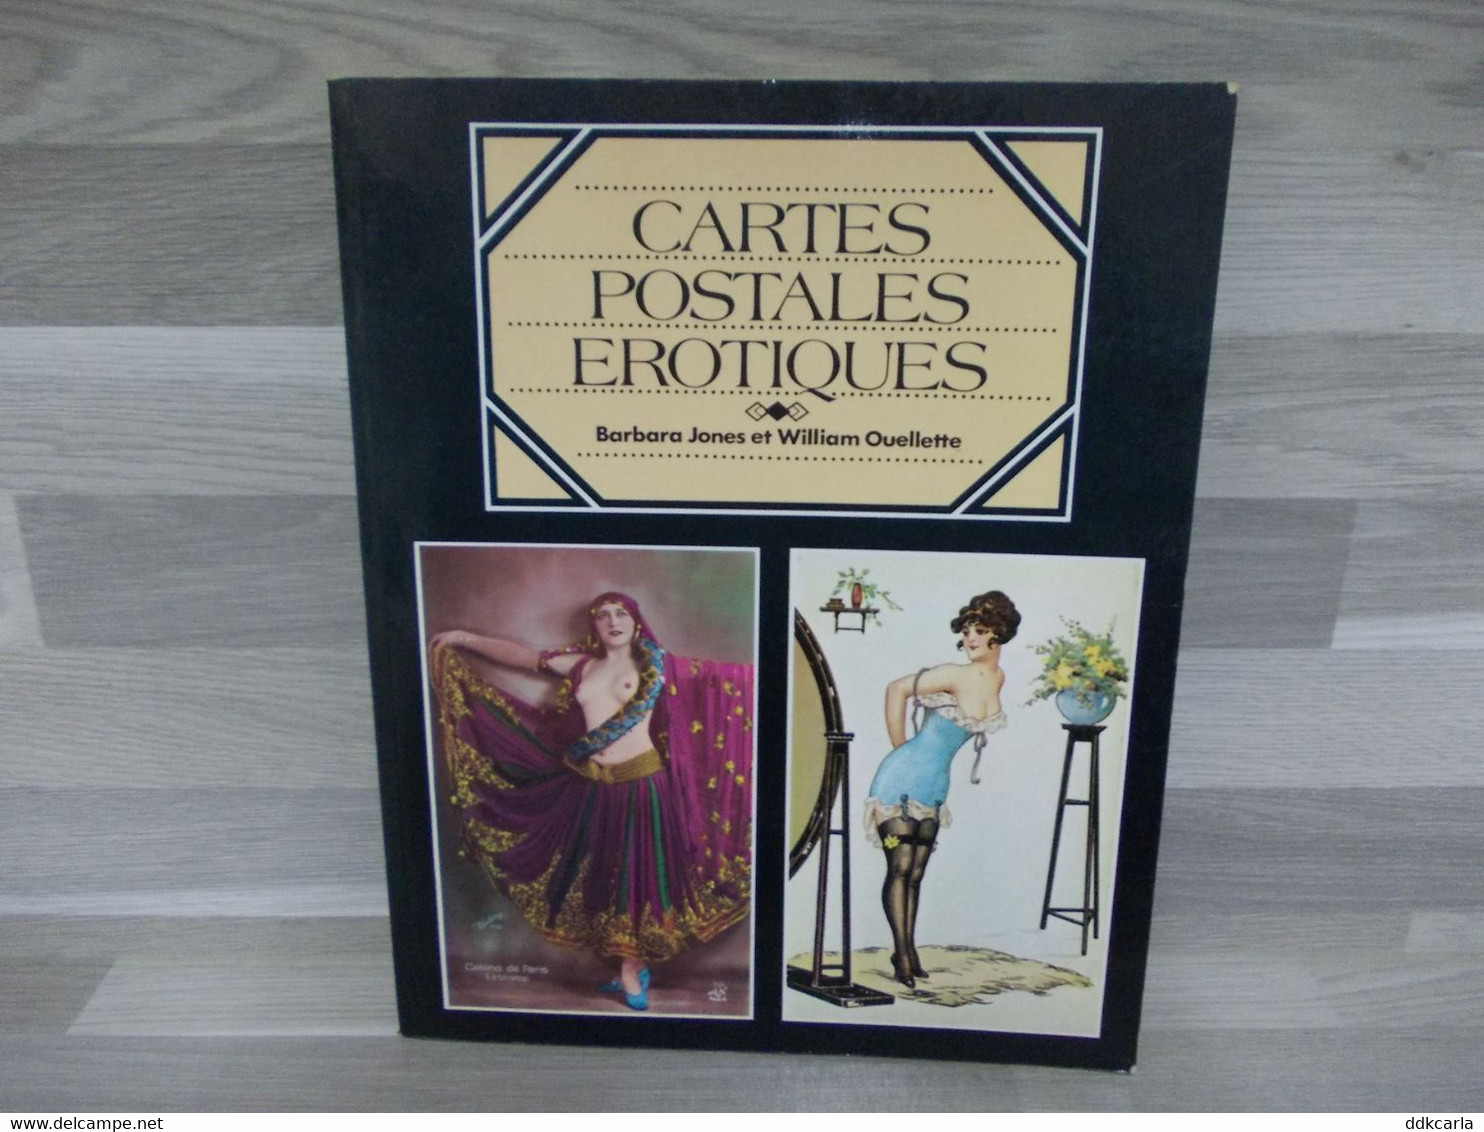 Cartes Postales Erotiques - Barbara Jones Et William Ouellette - Libros & Catálogos